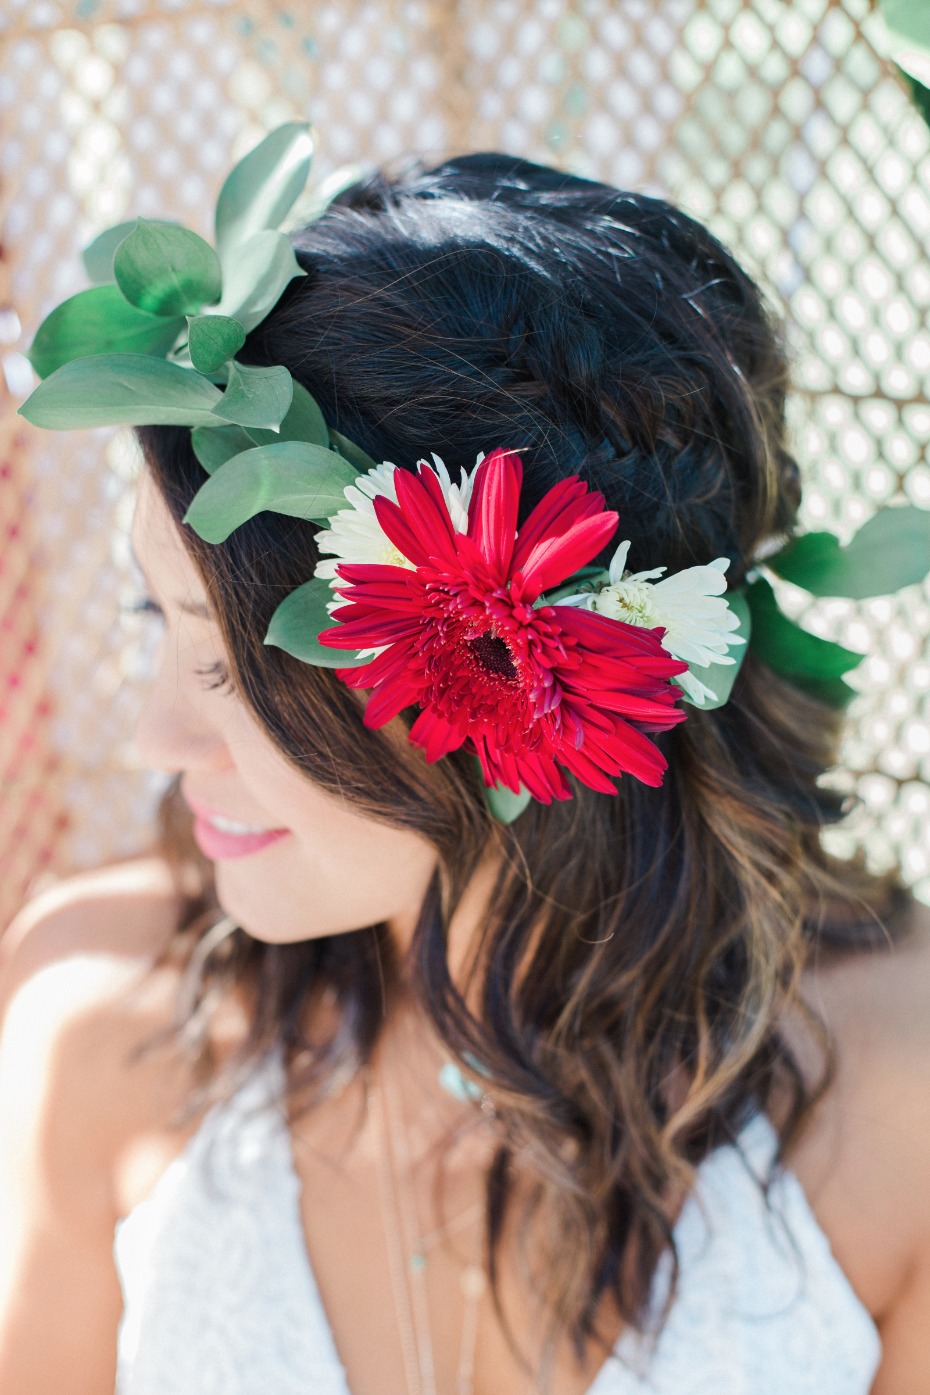 Bridal shower flower crown idea